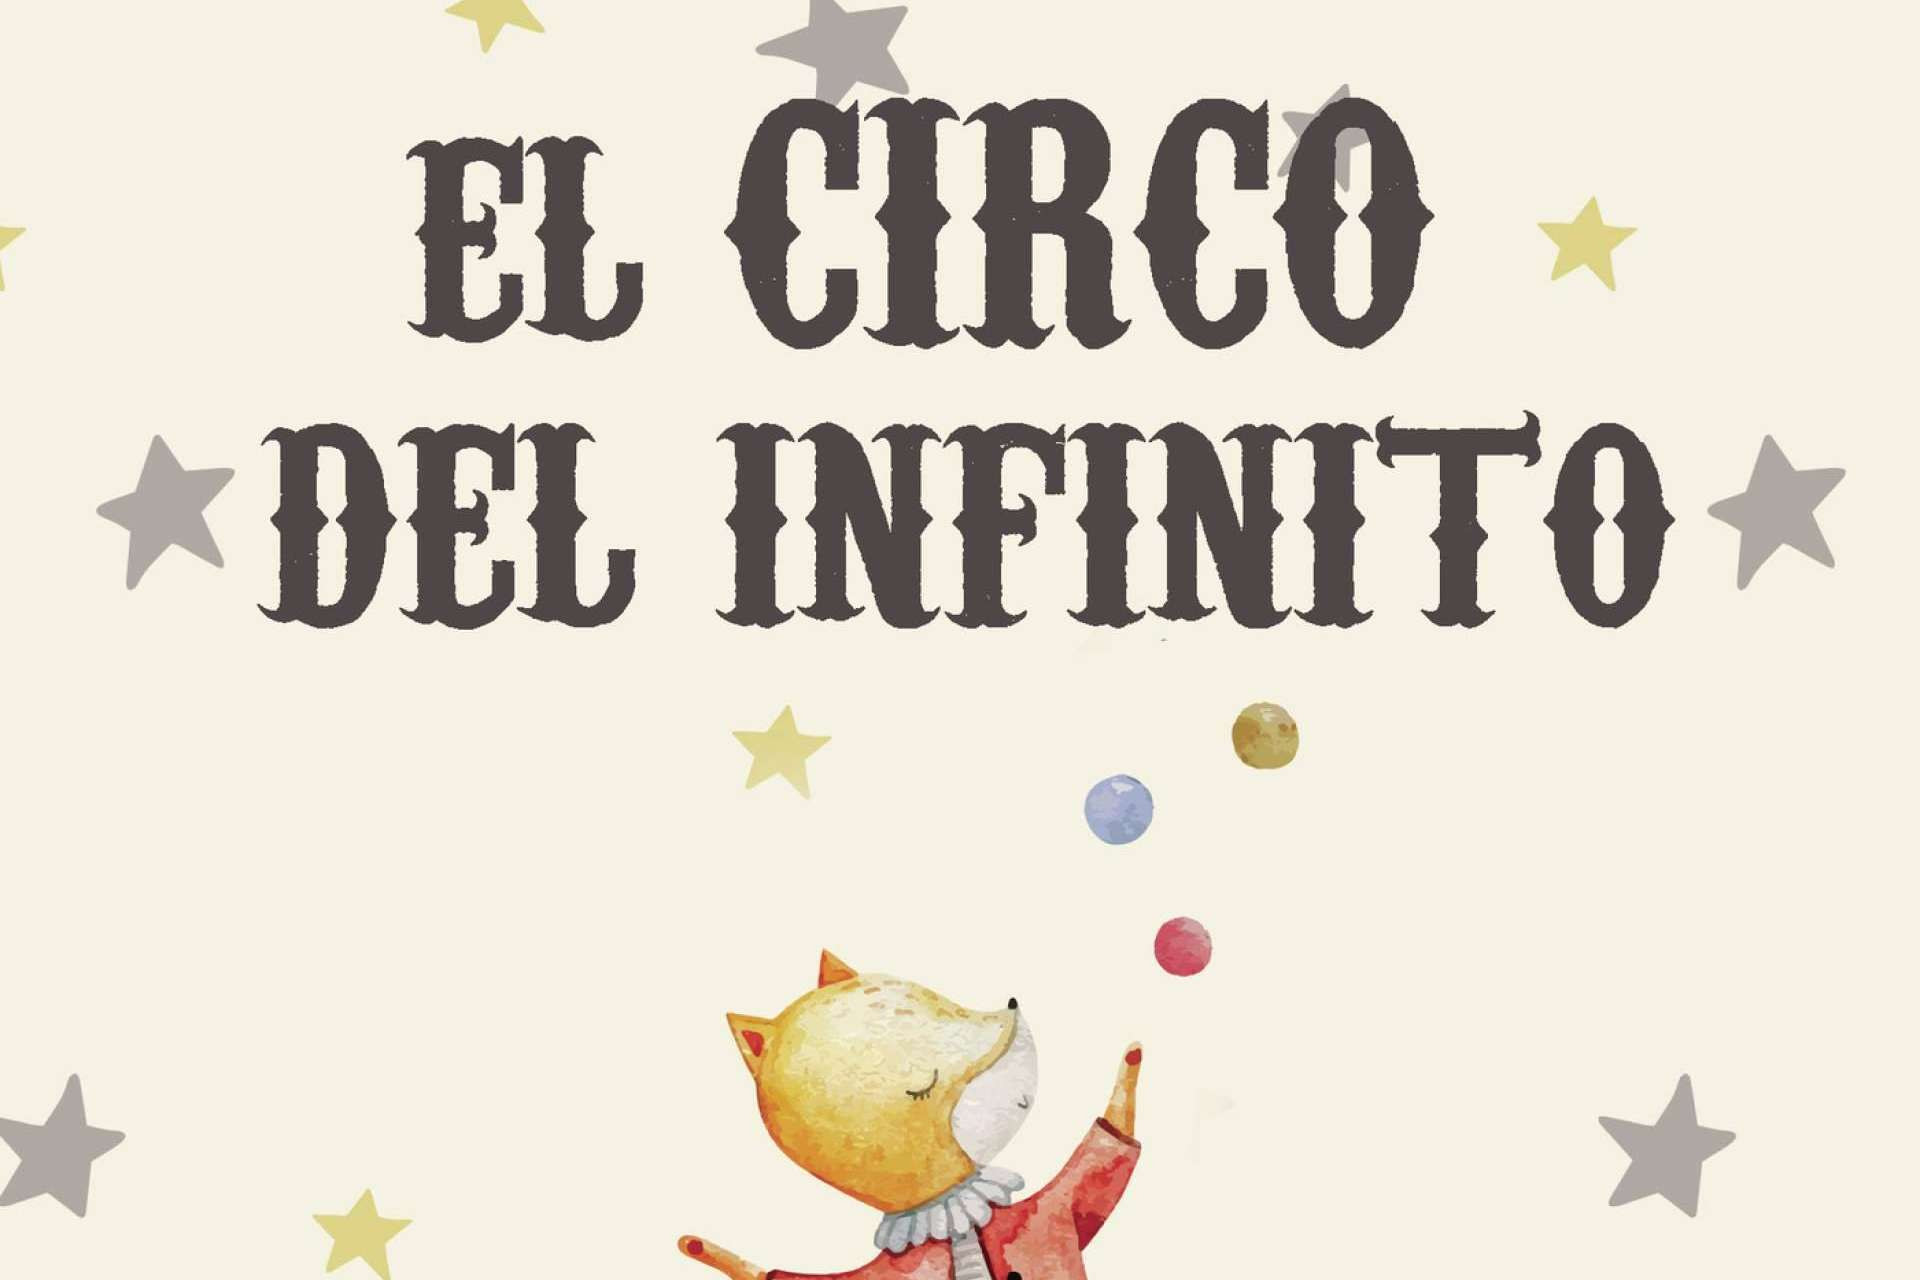  'El Circo del Infinito'. Editorial Caligrama publica la esperada obra de Gustavo A. Quintero 